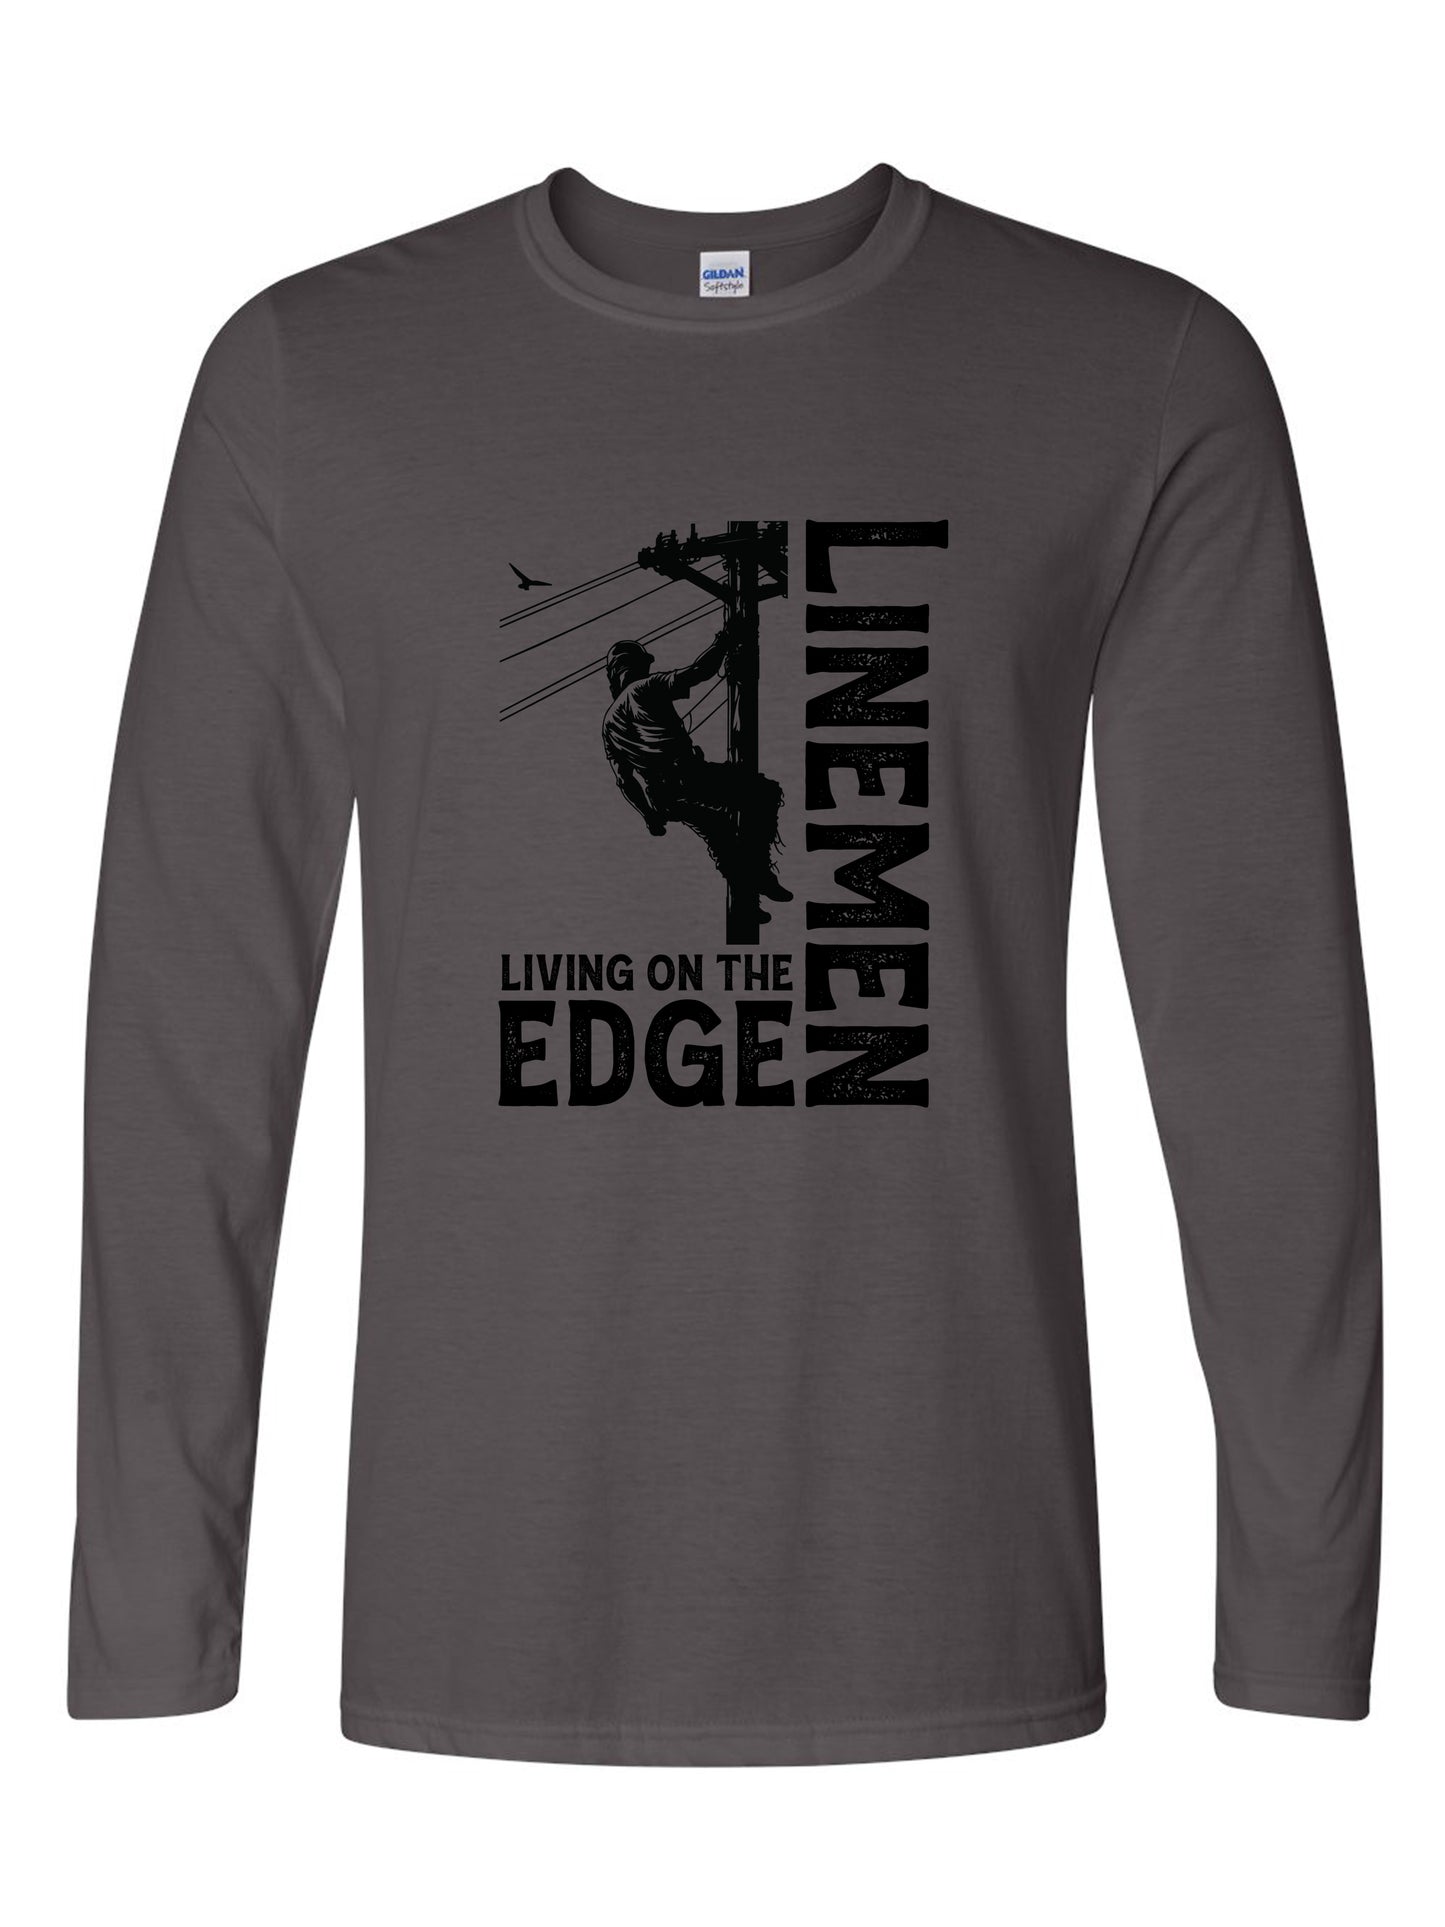 Lineman Living on the Edge - Softstyle Long Sleeve Tee - Charcoal